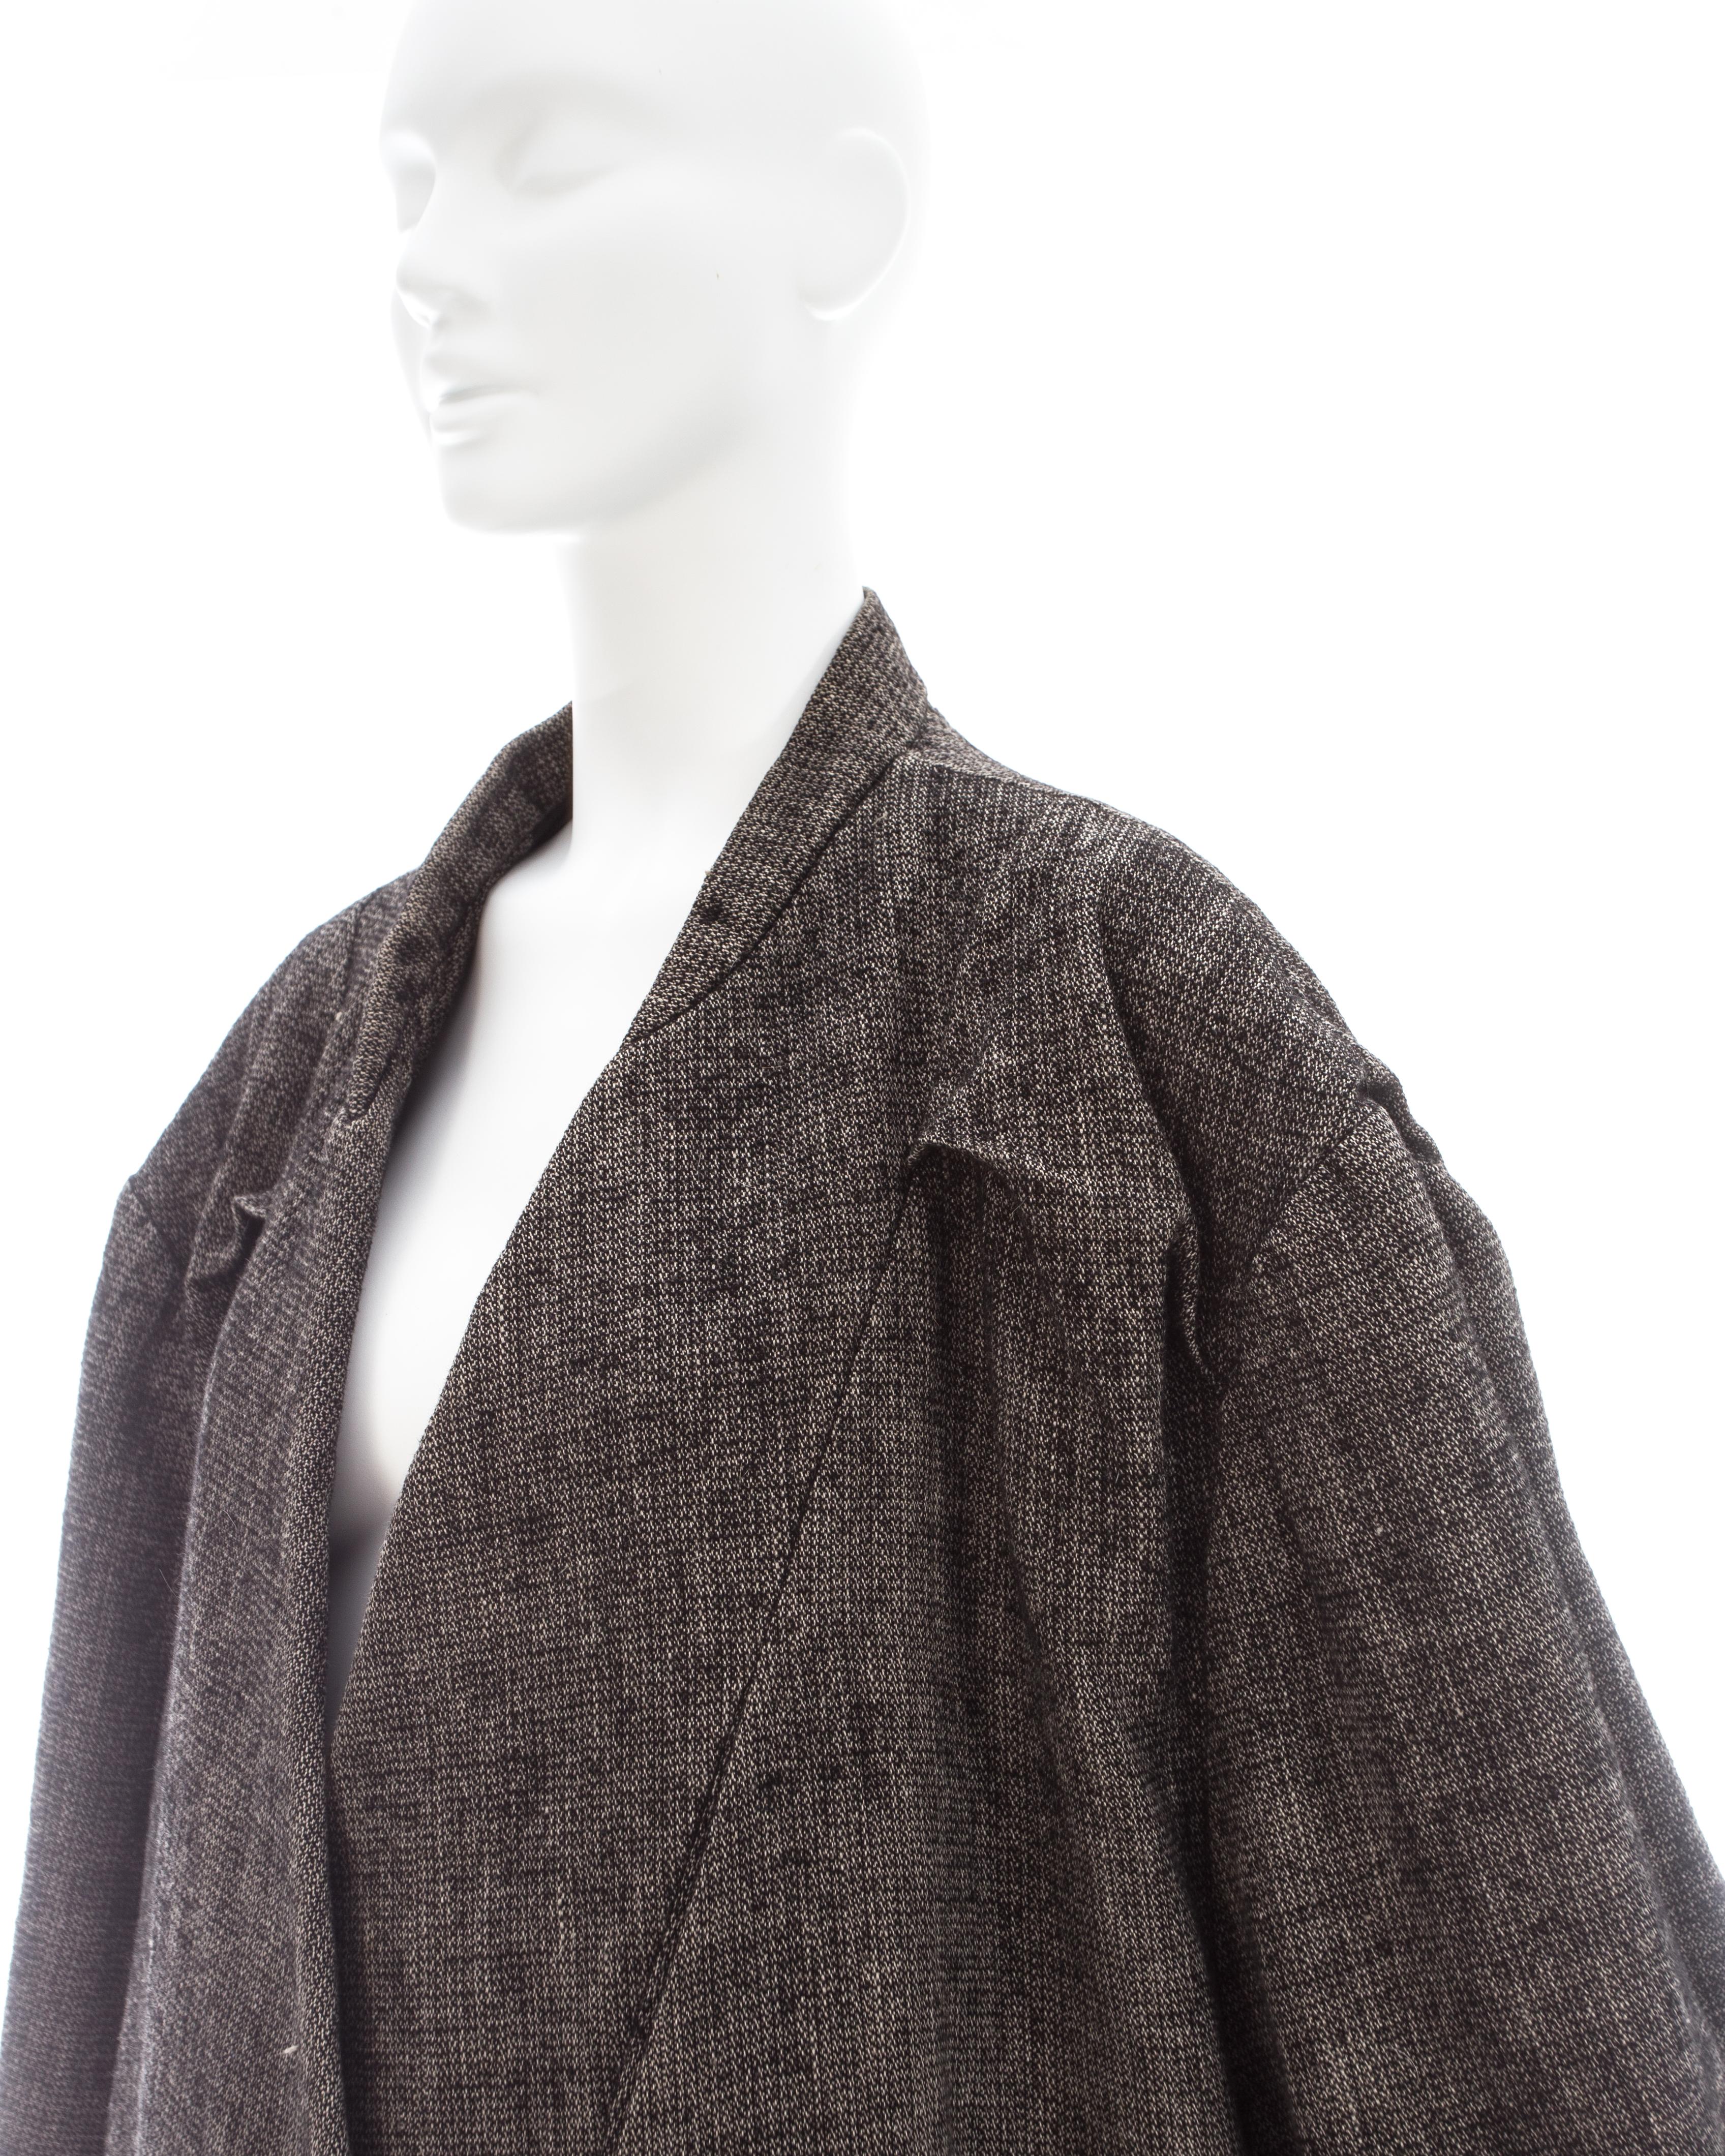 Martin Margiela grey wool and linen XXL size 78 double inside coat, fw 2000 For Sale 4